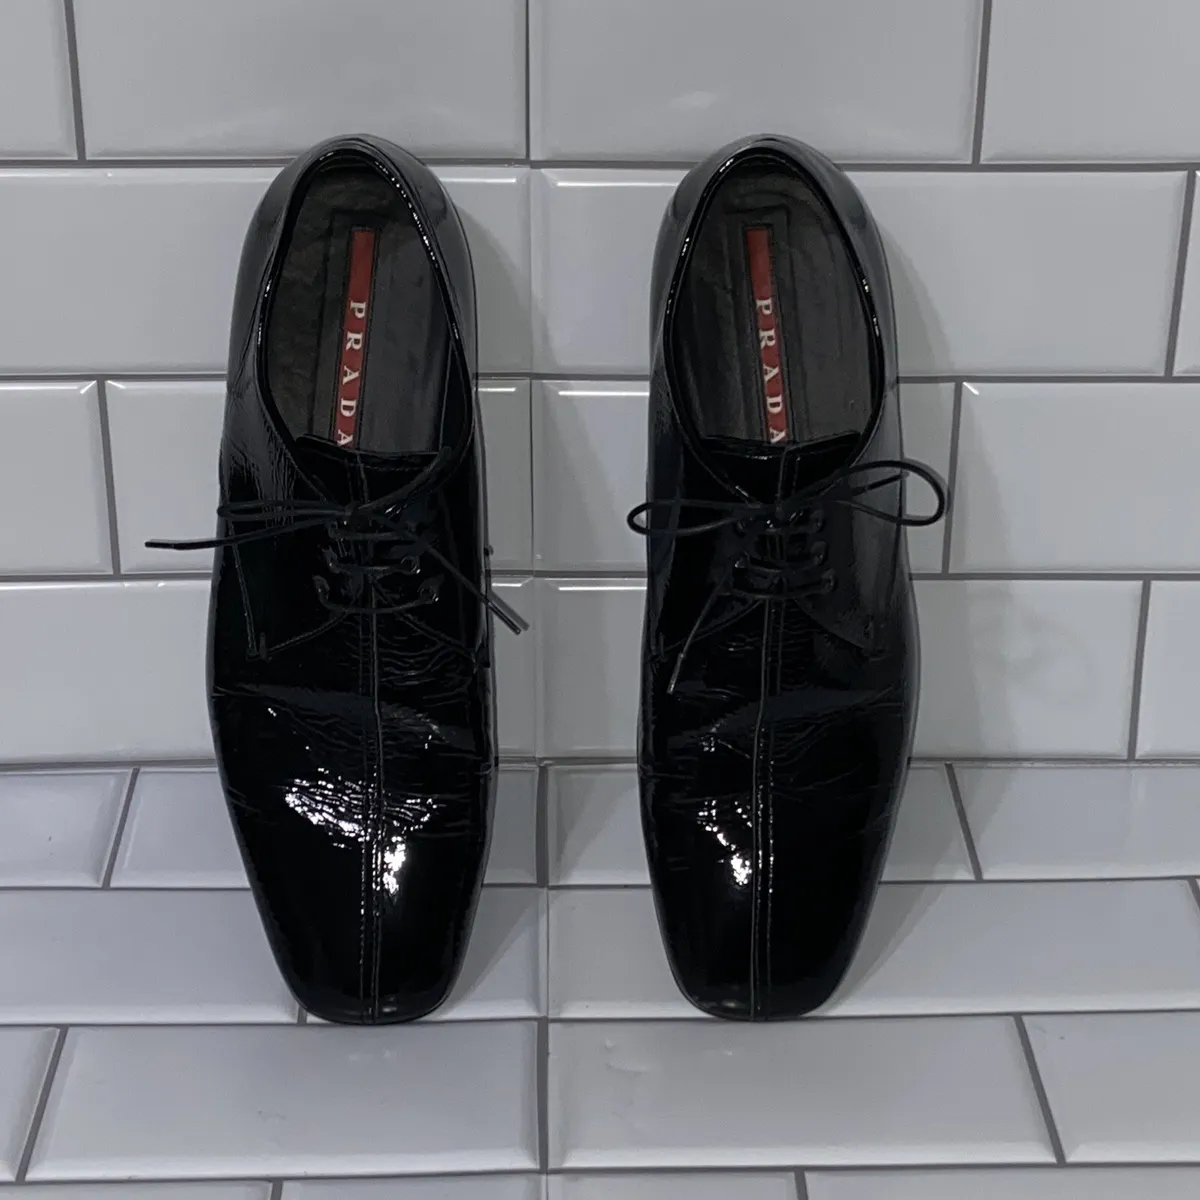 Sport Men's Derby Oxford Dress Shoes UK 6 US 7 Black Patent Leather | eBay